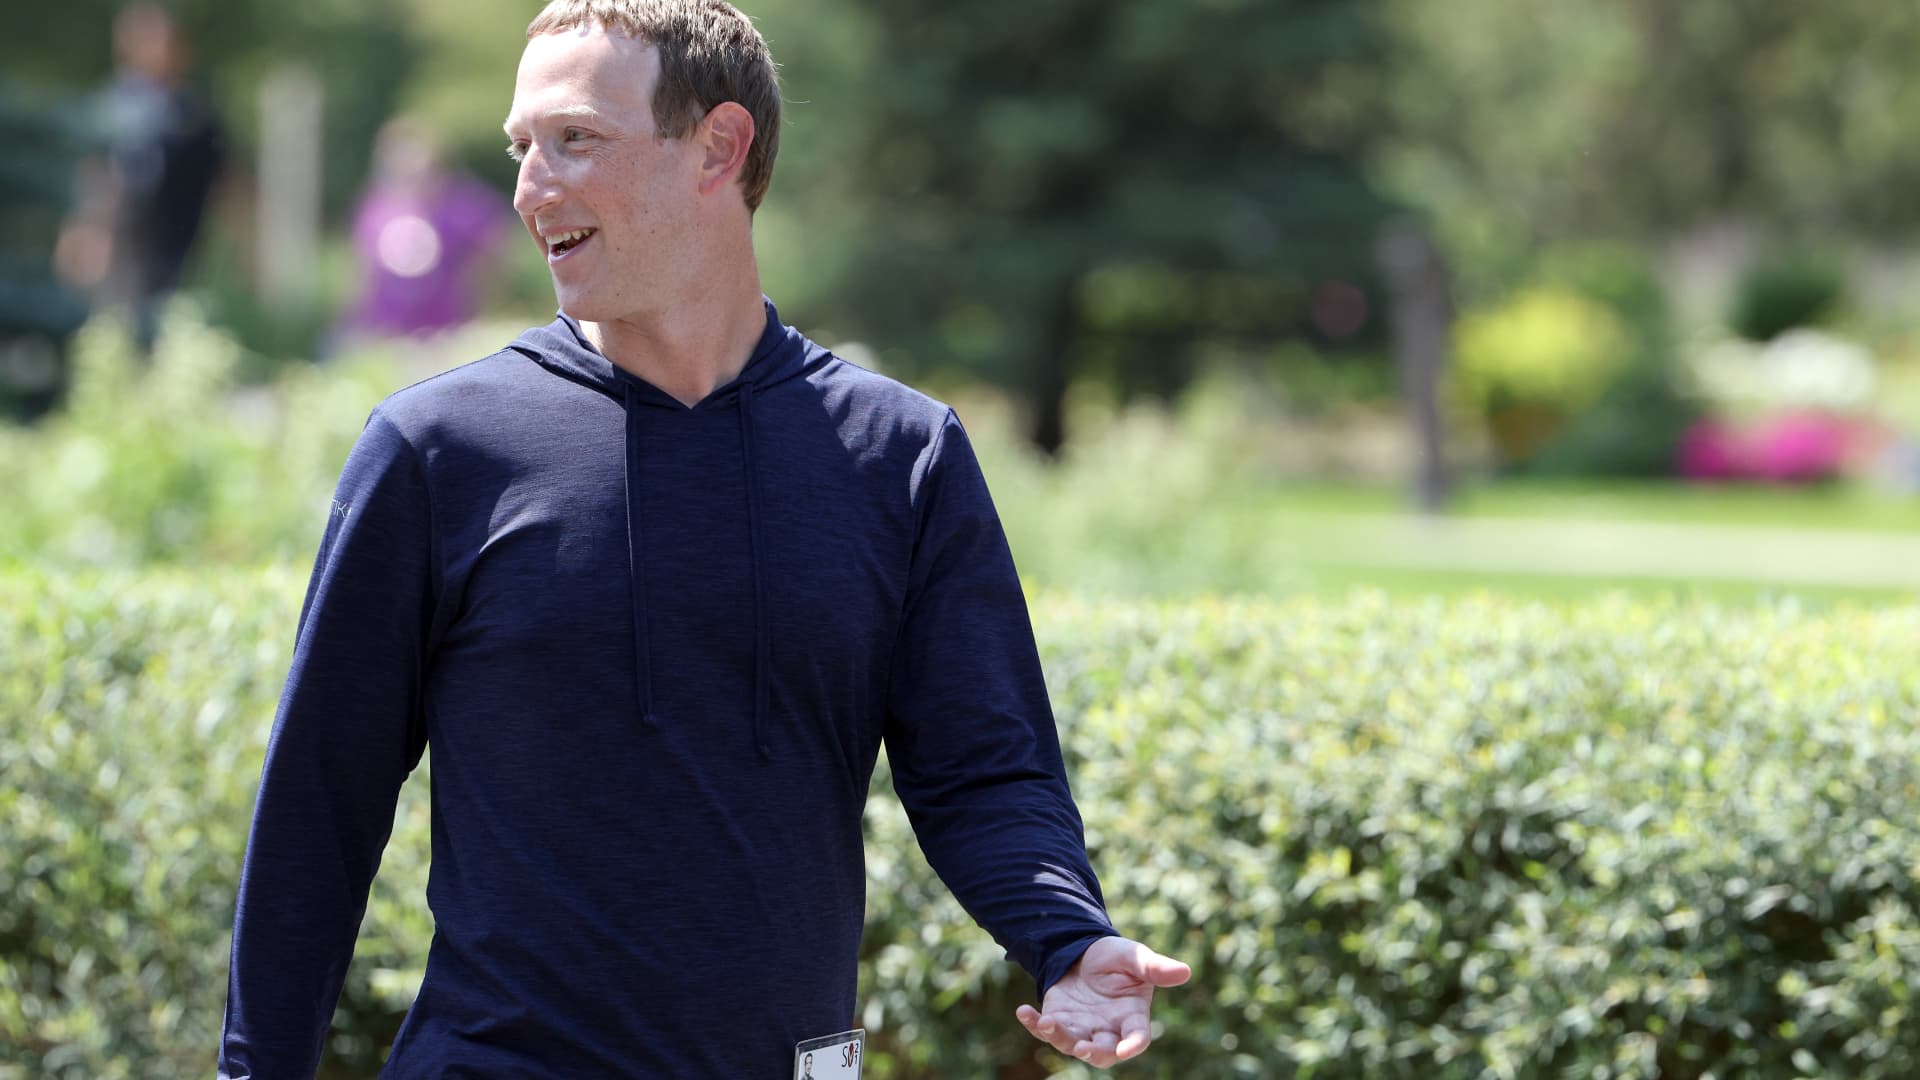 Meta CEO Mark Zuckerberg touts to employees 'incredible breakthroughs' the company has seen in A.I.